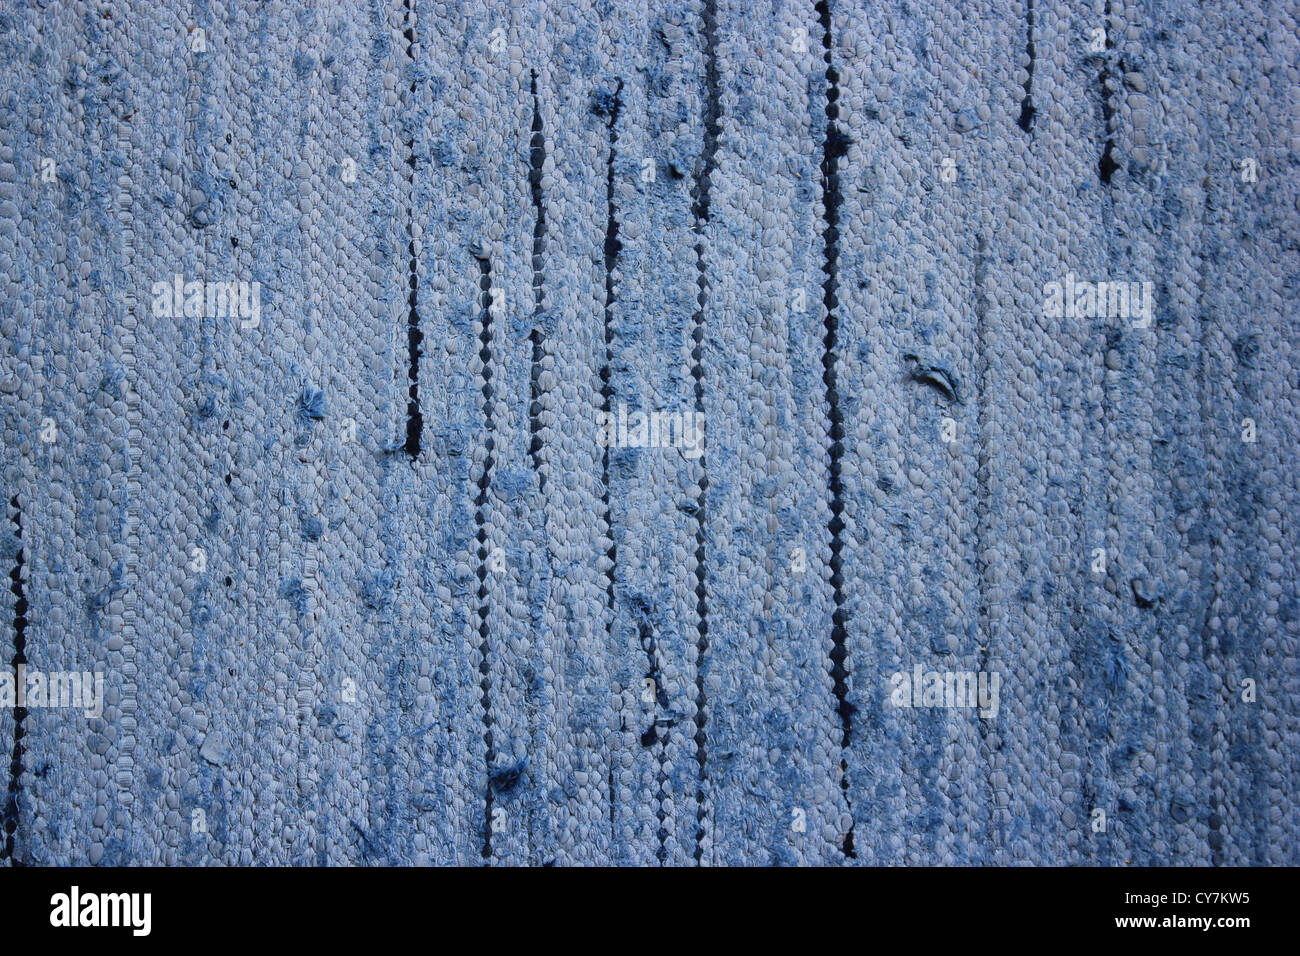 La texture du tapis de sol bleu Banque D'Images